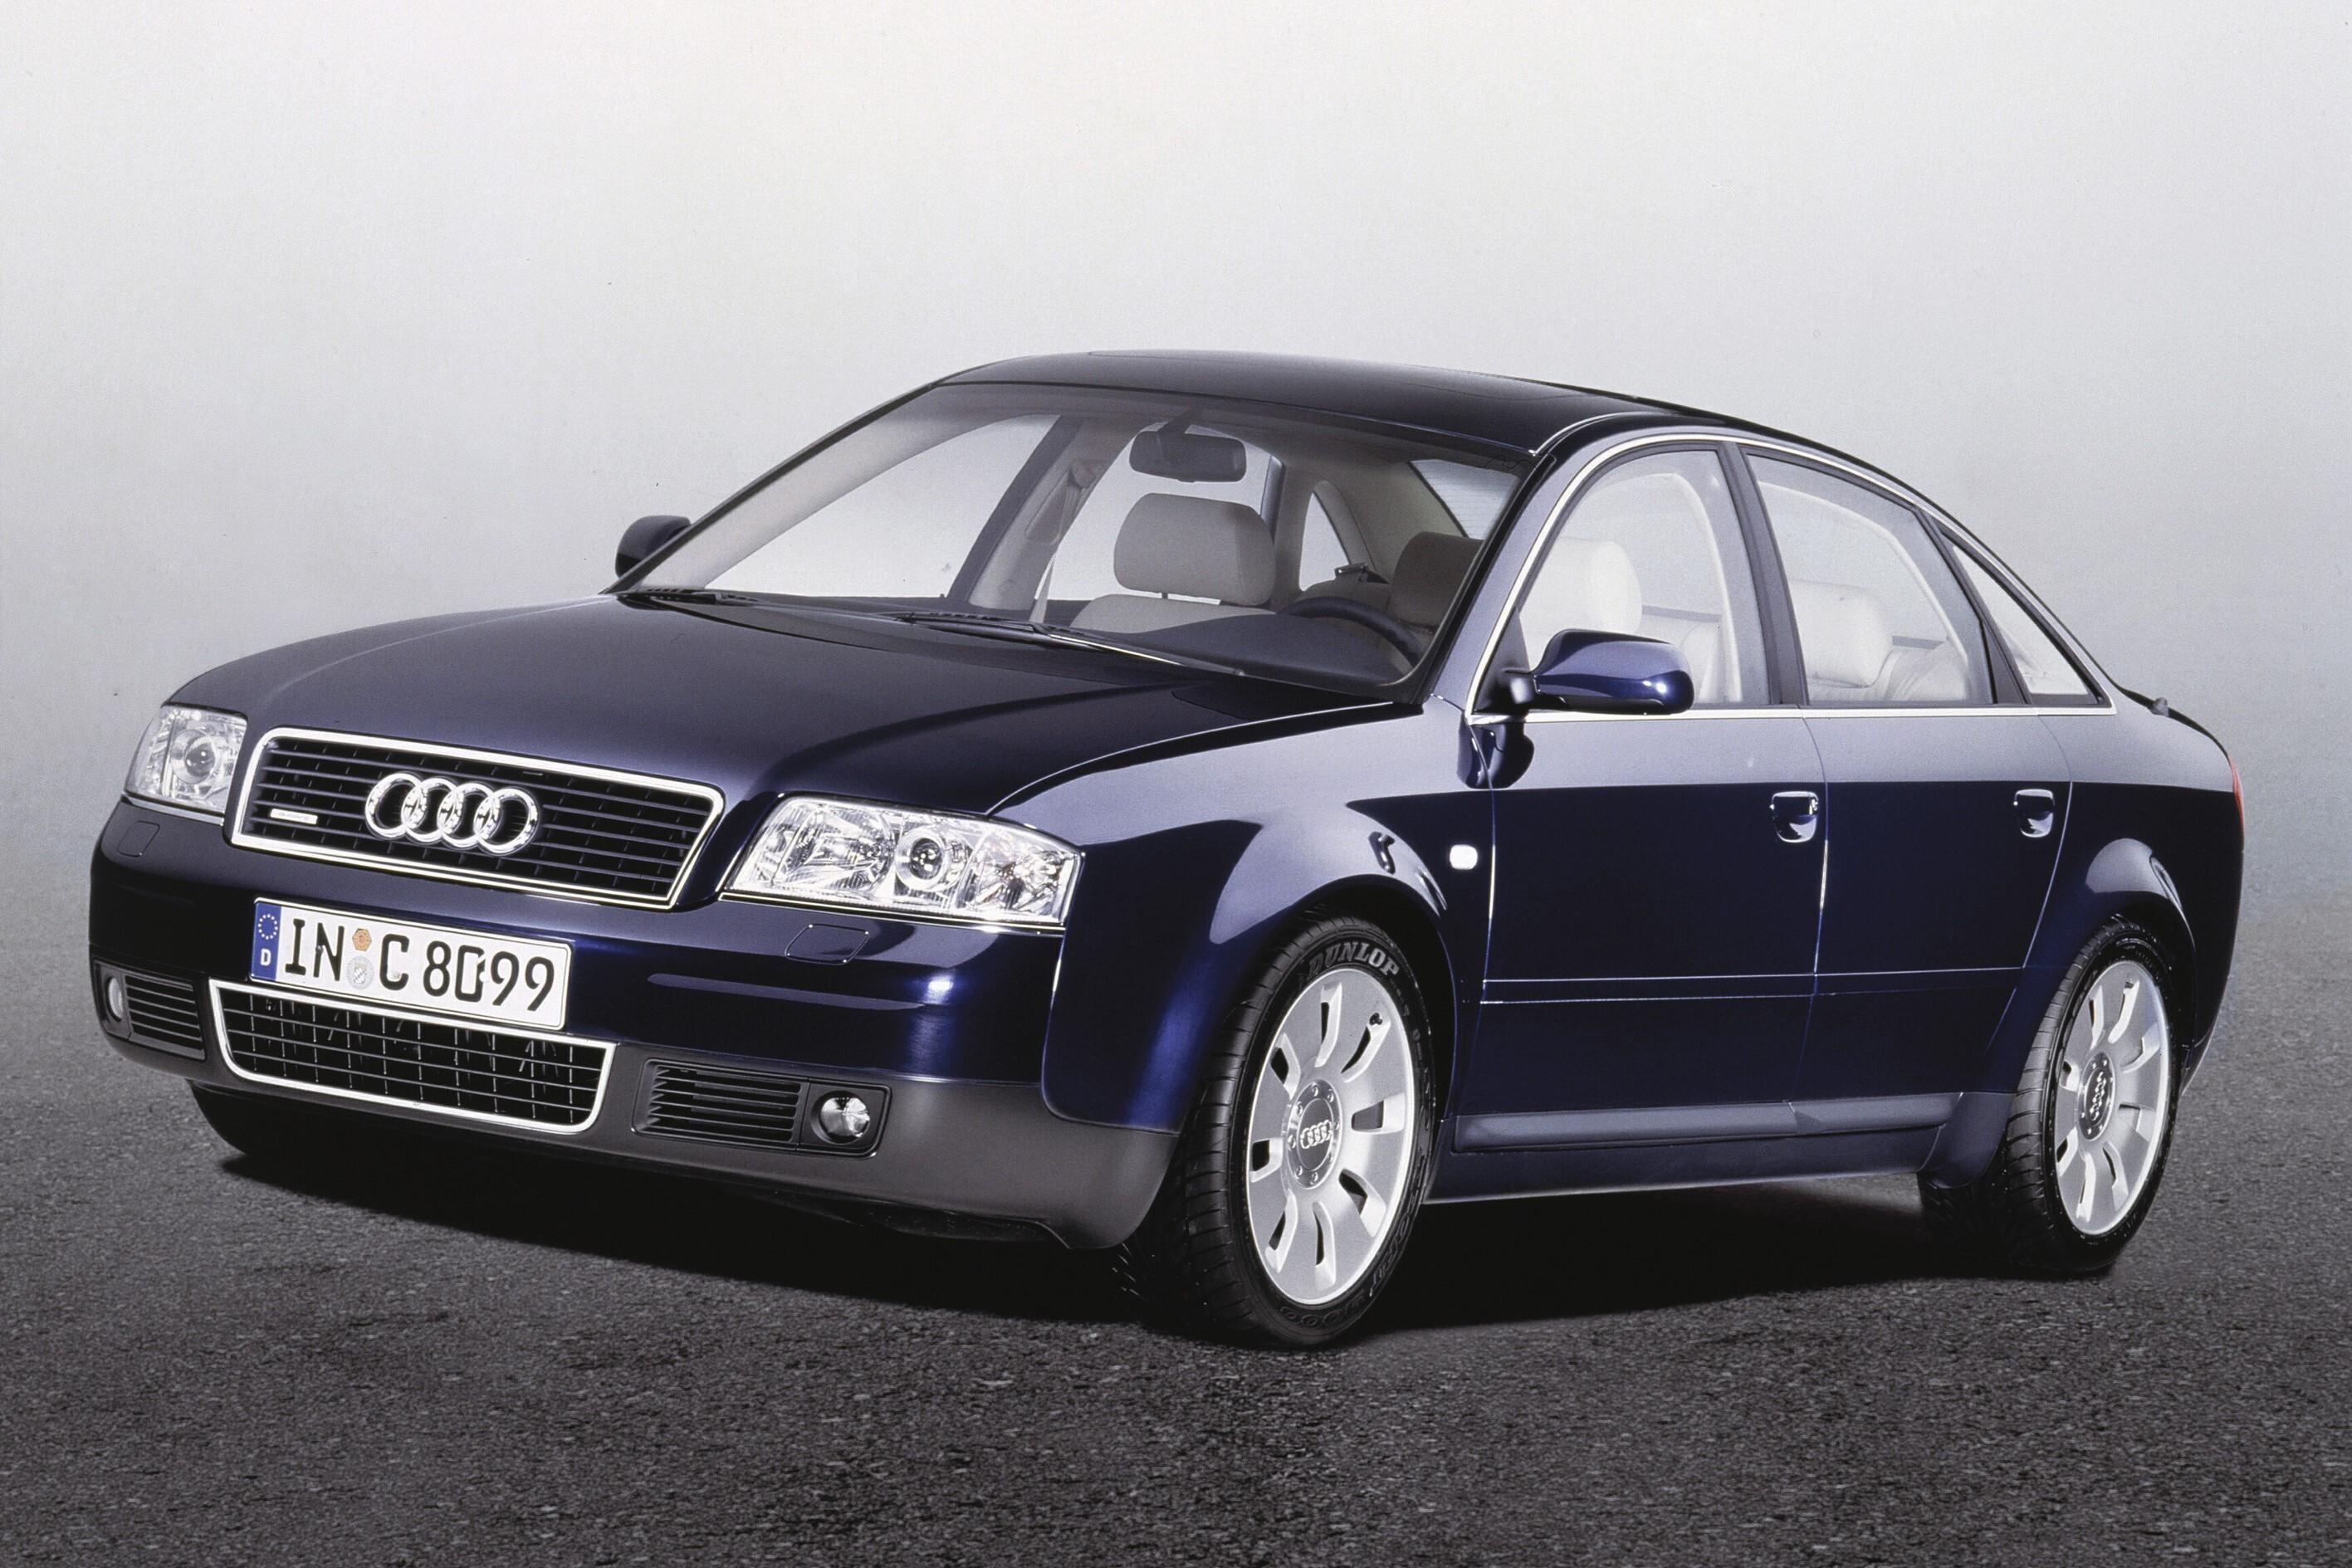 Ауди 4 2001 год. Audi a6 [c5] 1997-2004. Audi a6 c5. Audi a6 c5 1999. Audi a6 quattro седан.